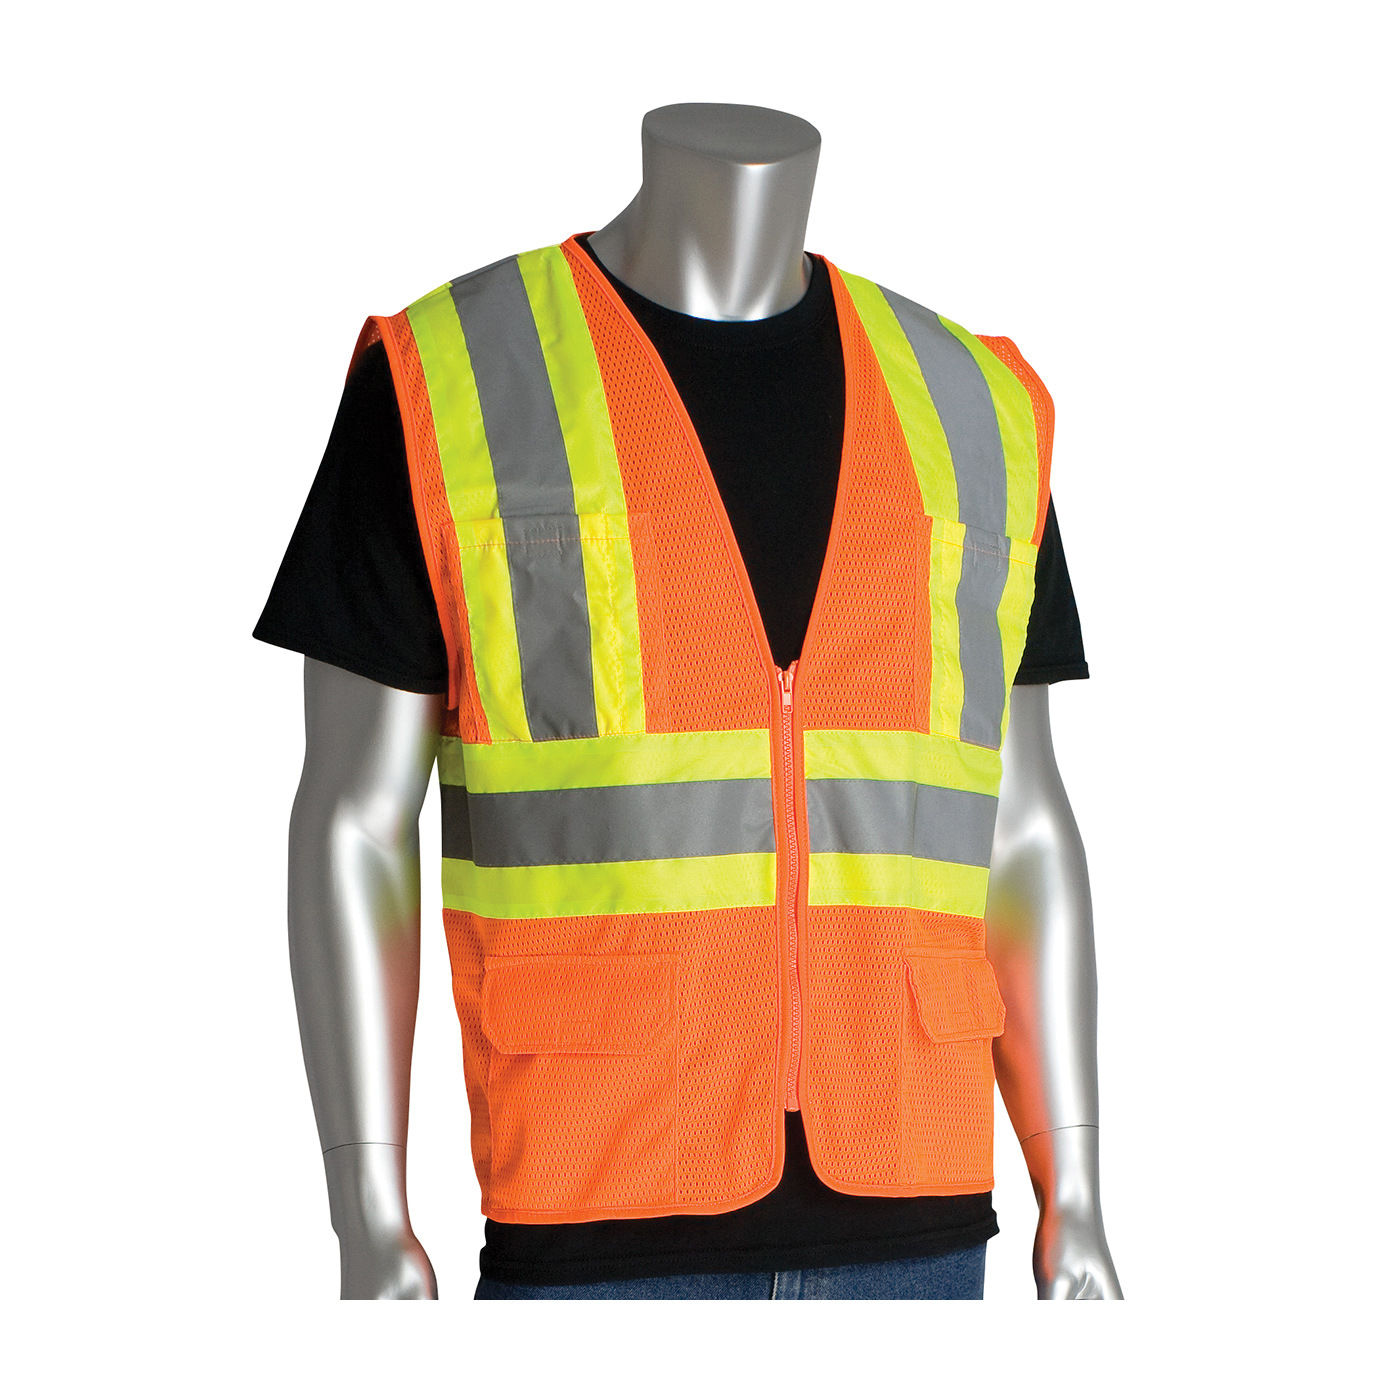 PIP® 302-MVZPOR-L 2-Tone Safety Vest, L, Hi-Viz Orange, Polyester Mesh, Zipper Closure, 6 Pockets, ANSI Class: Class 2, Specifications Met: ANSI 107 Type R